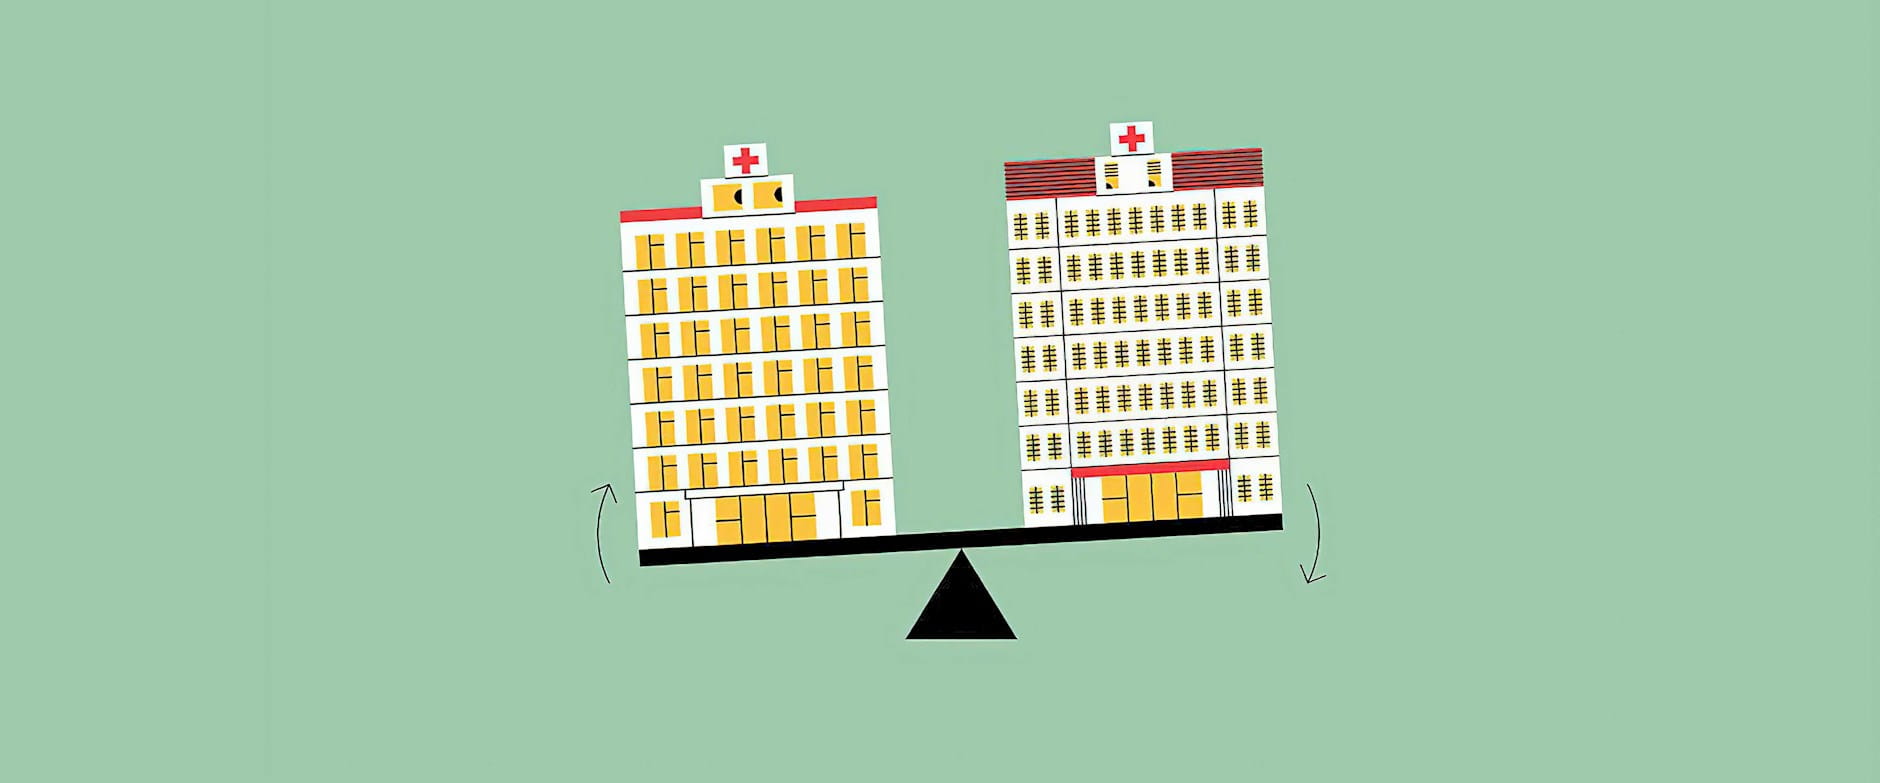 Hospital buildings on a scale